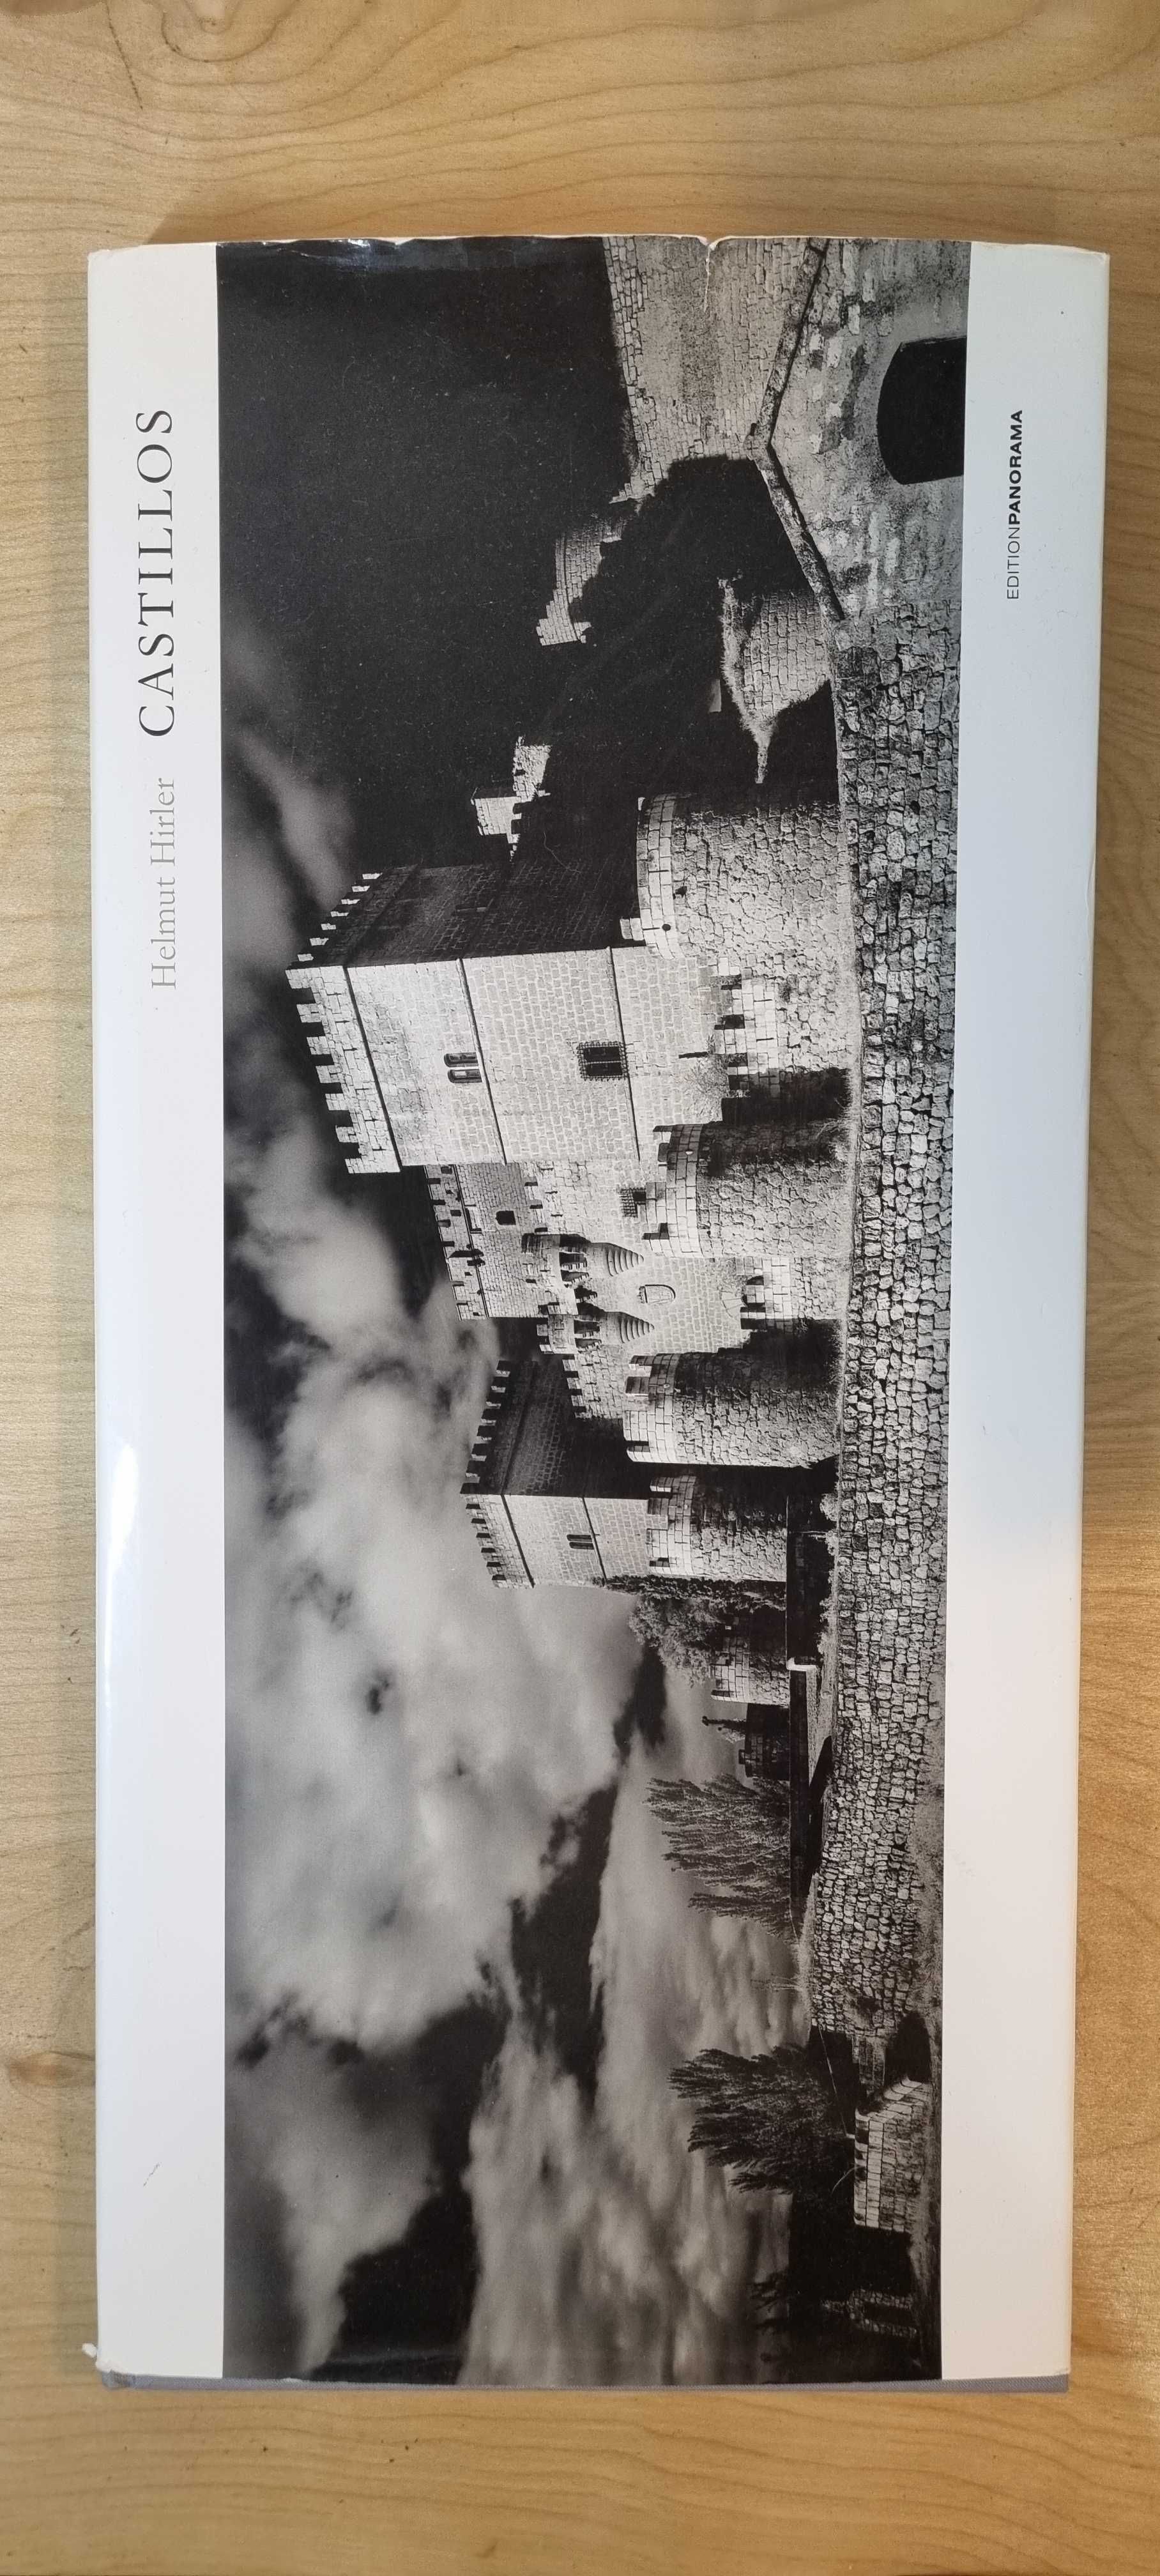 Livro panorâmico: "Castillos" de Helmut Hirler